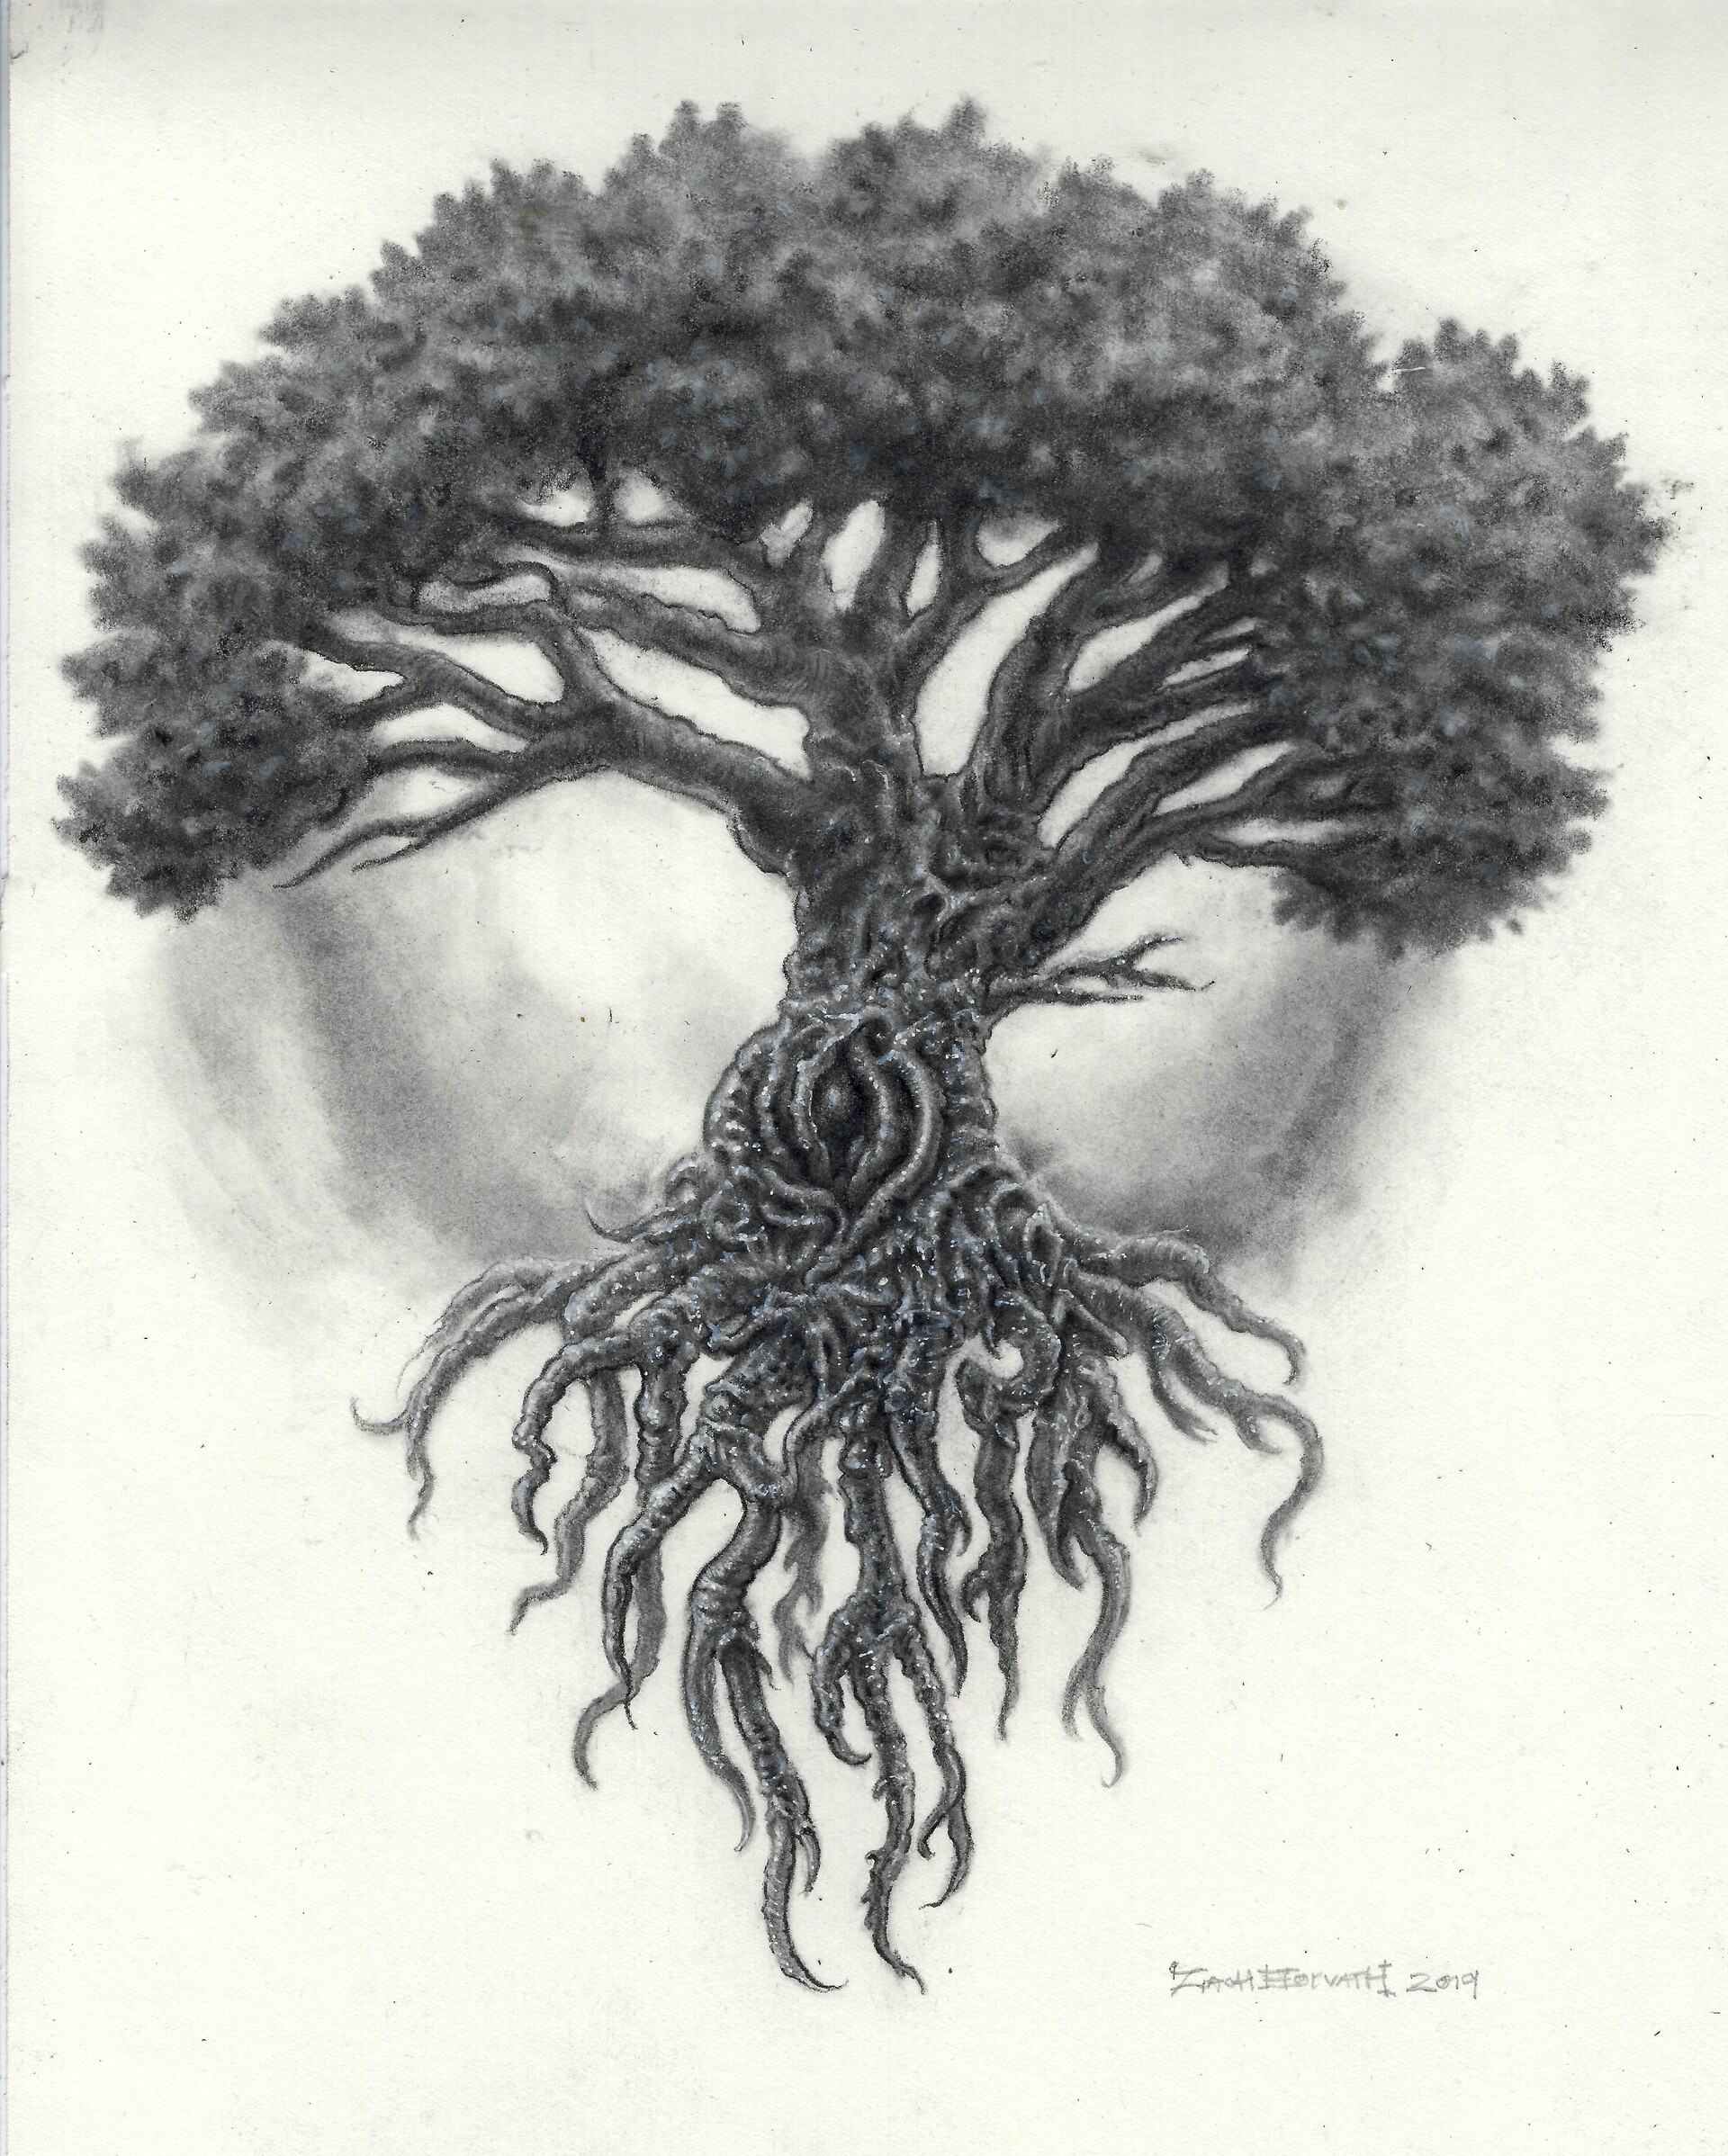 tree of life drawing